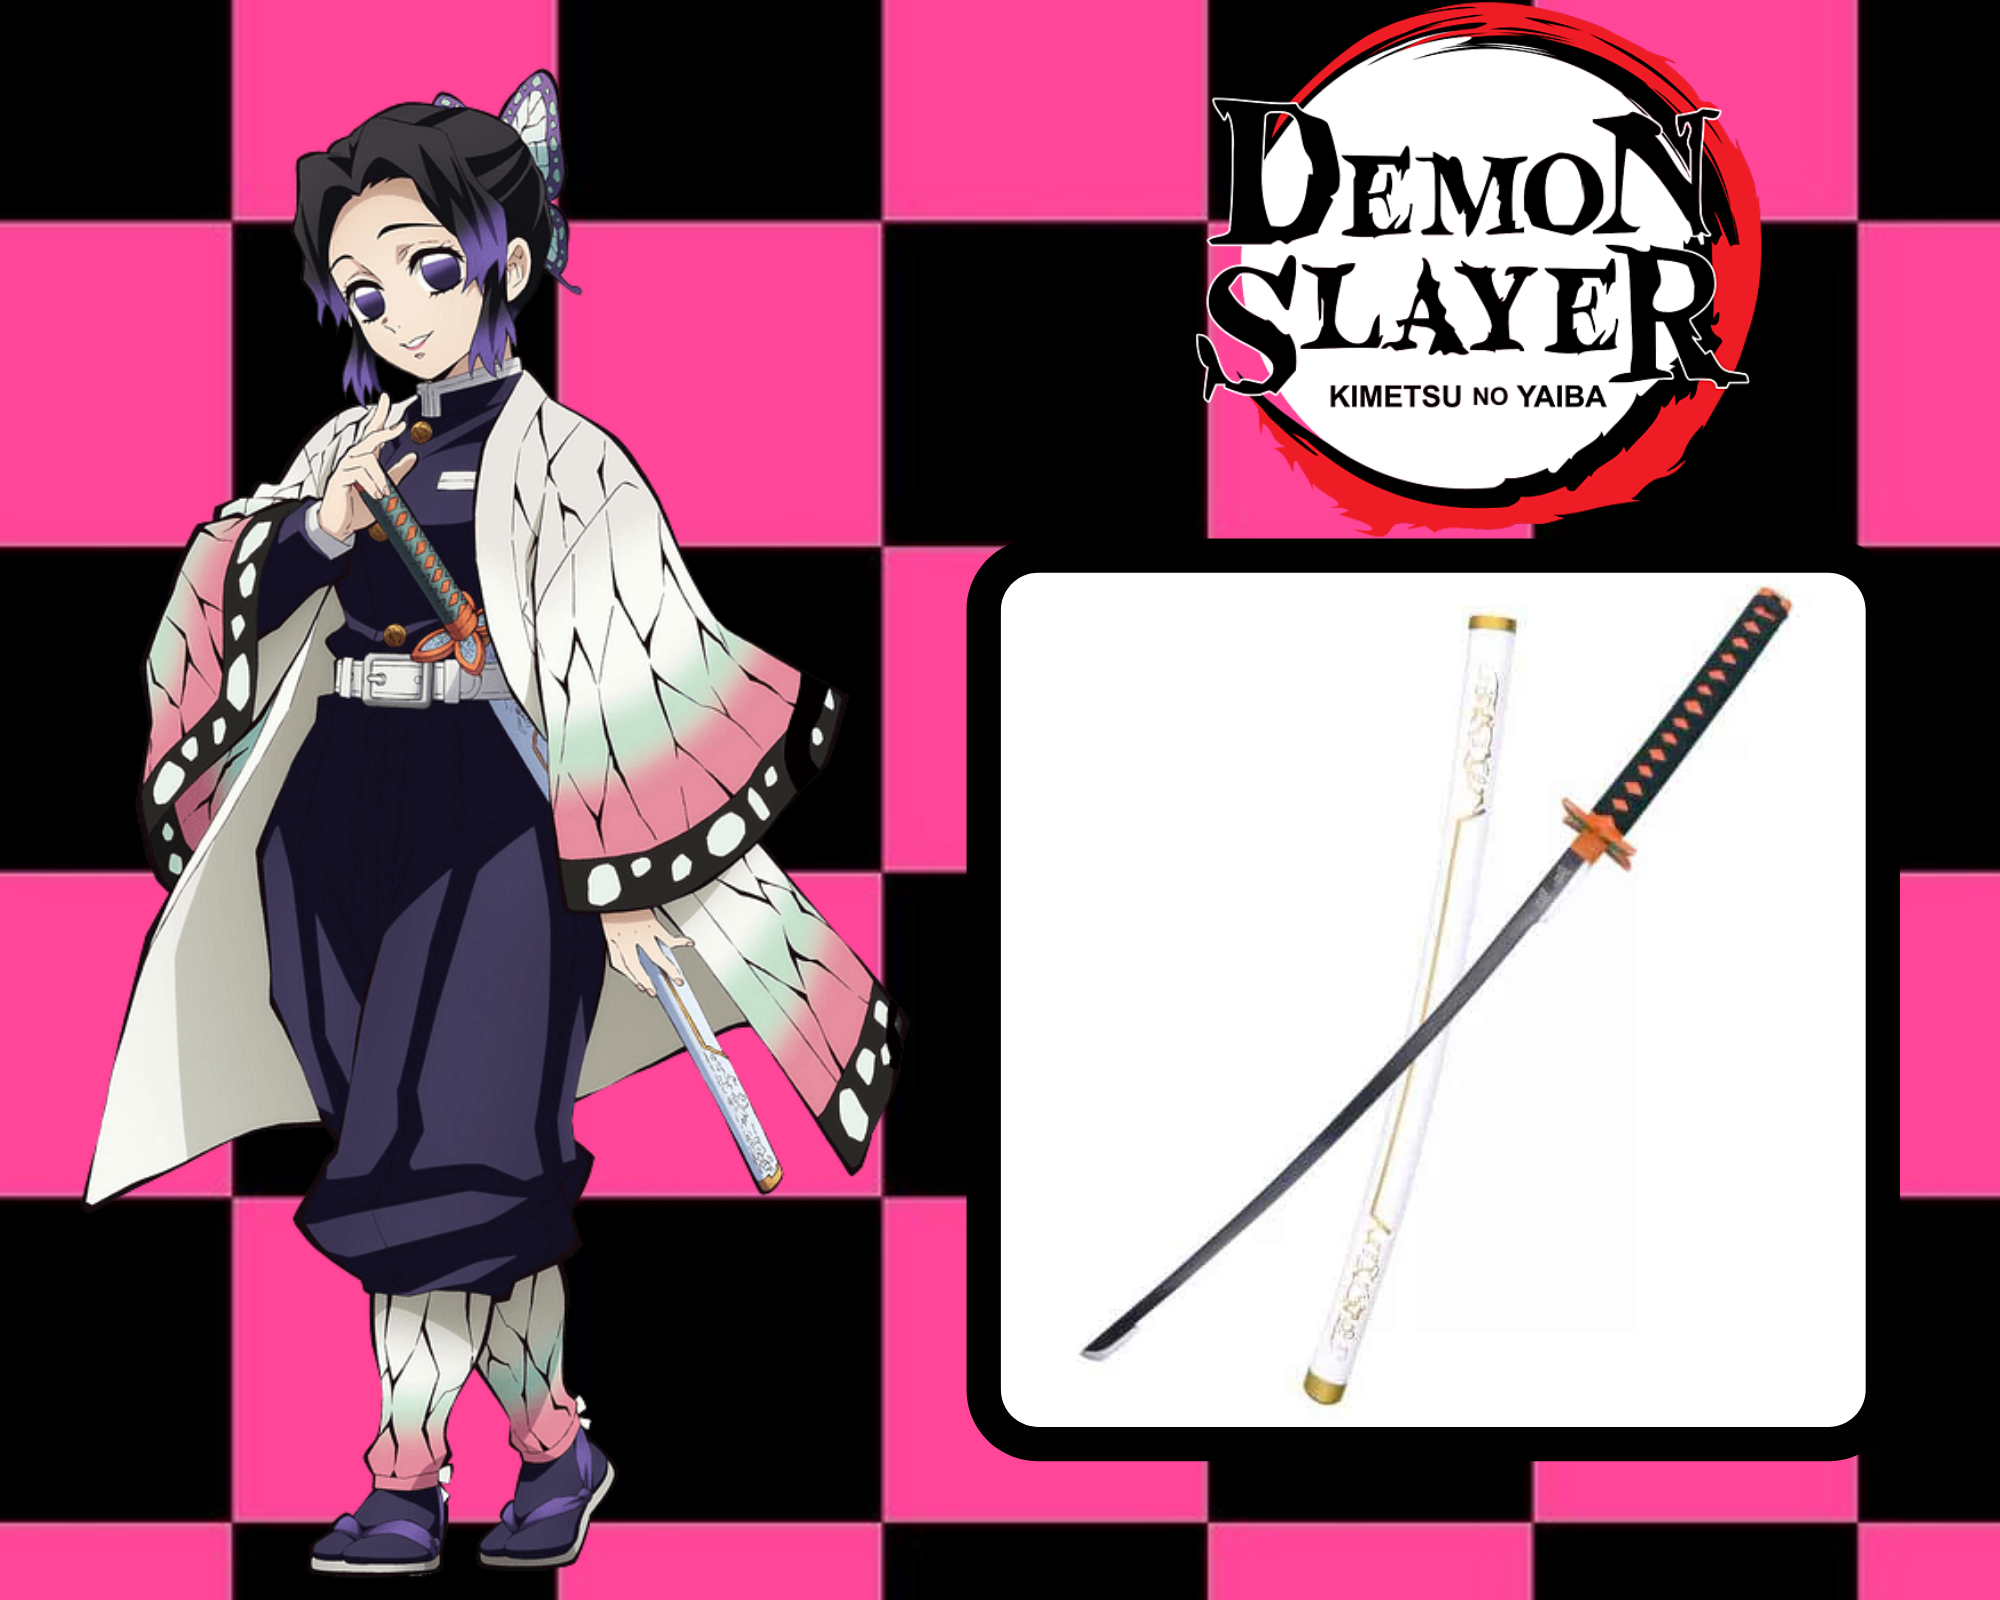 Demon Slayer Shinobu Kocho Cosplay Anime Costume Set - $89.99 - The Mad Shop